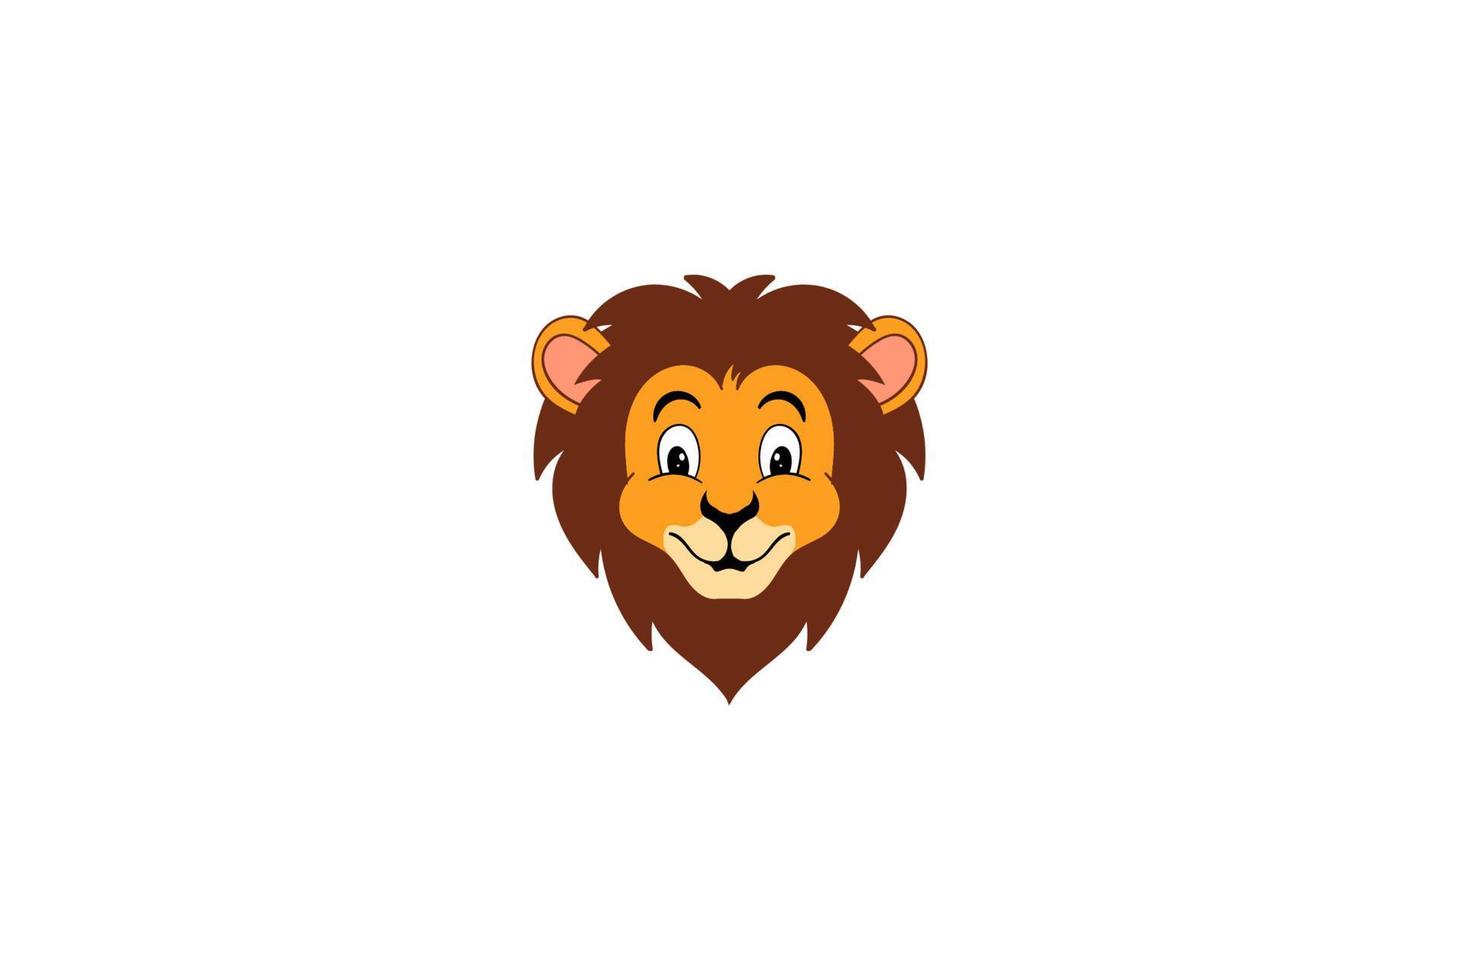 Cute Smile Lion Head Face Cartoon Mascot Character Logo Design Vector